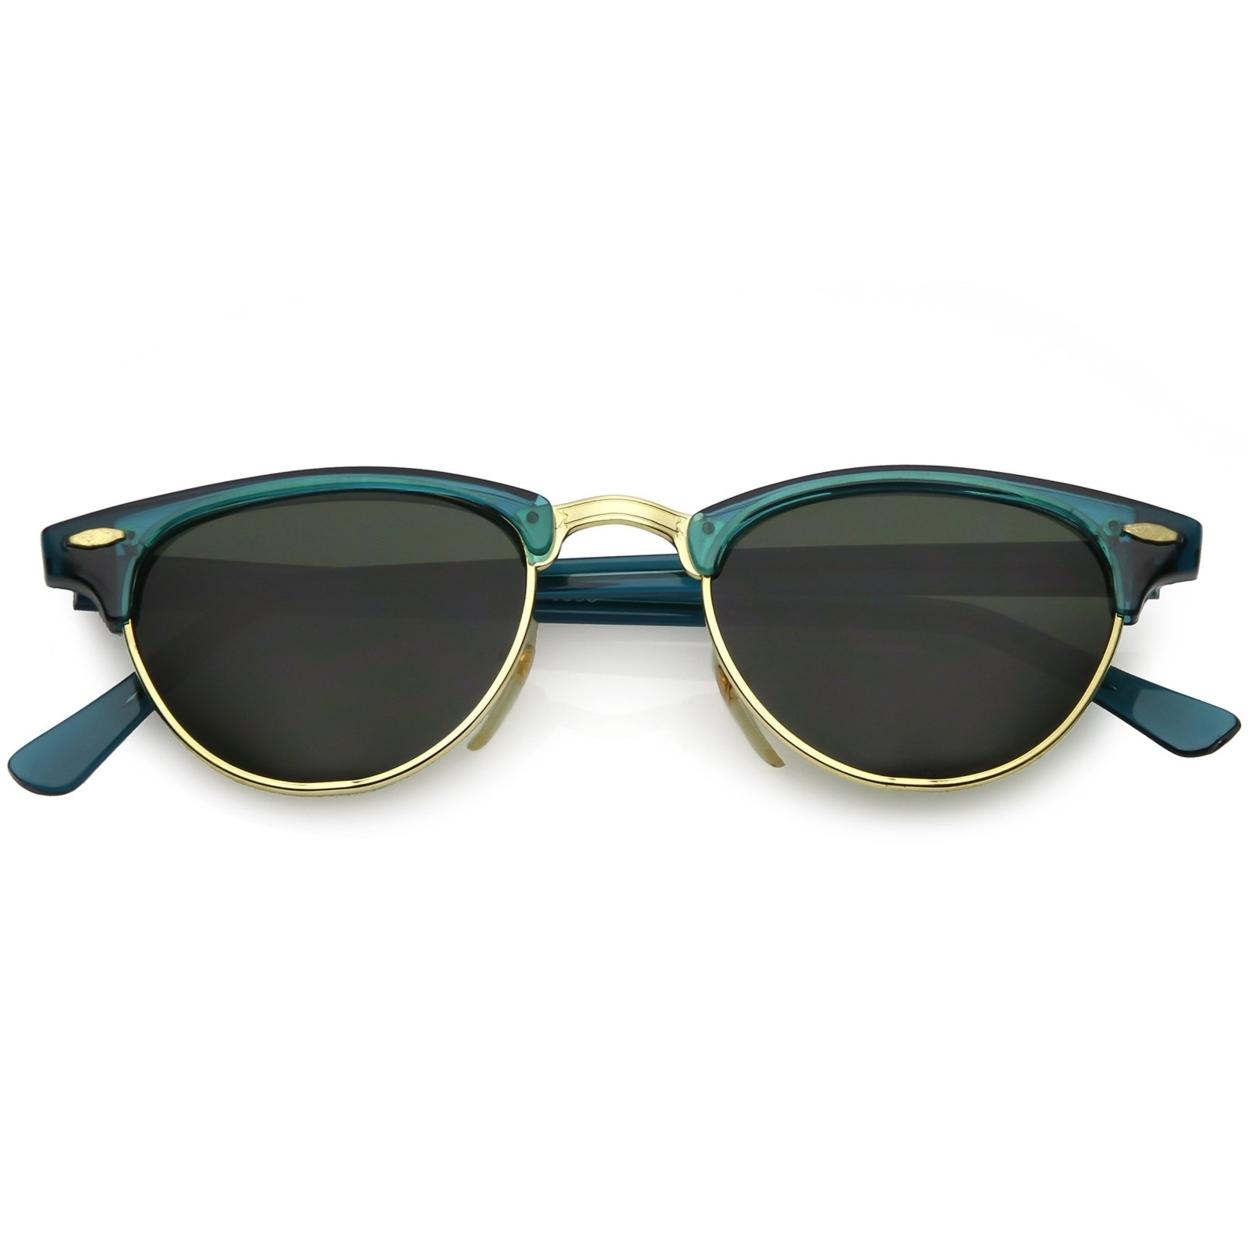 True Vintage Horn Rimmed Semi Rimless Sunglasses Green Tinted Oval Lens 49mm - Green / Green